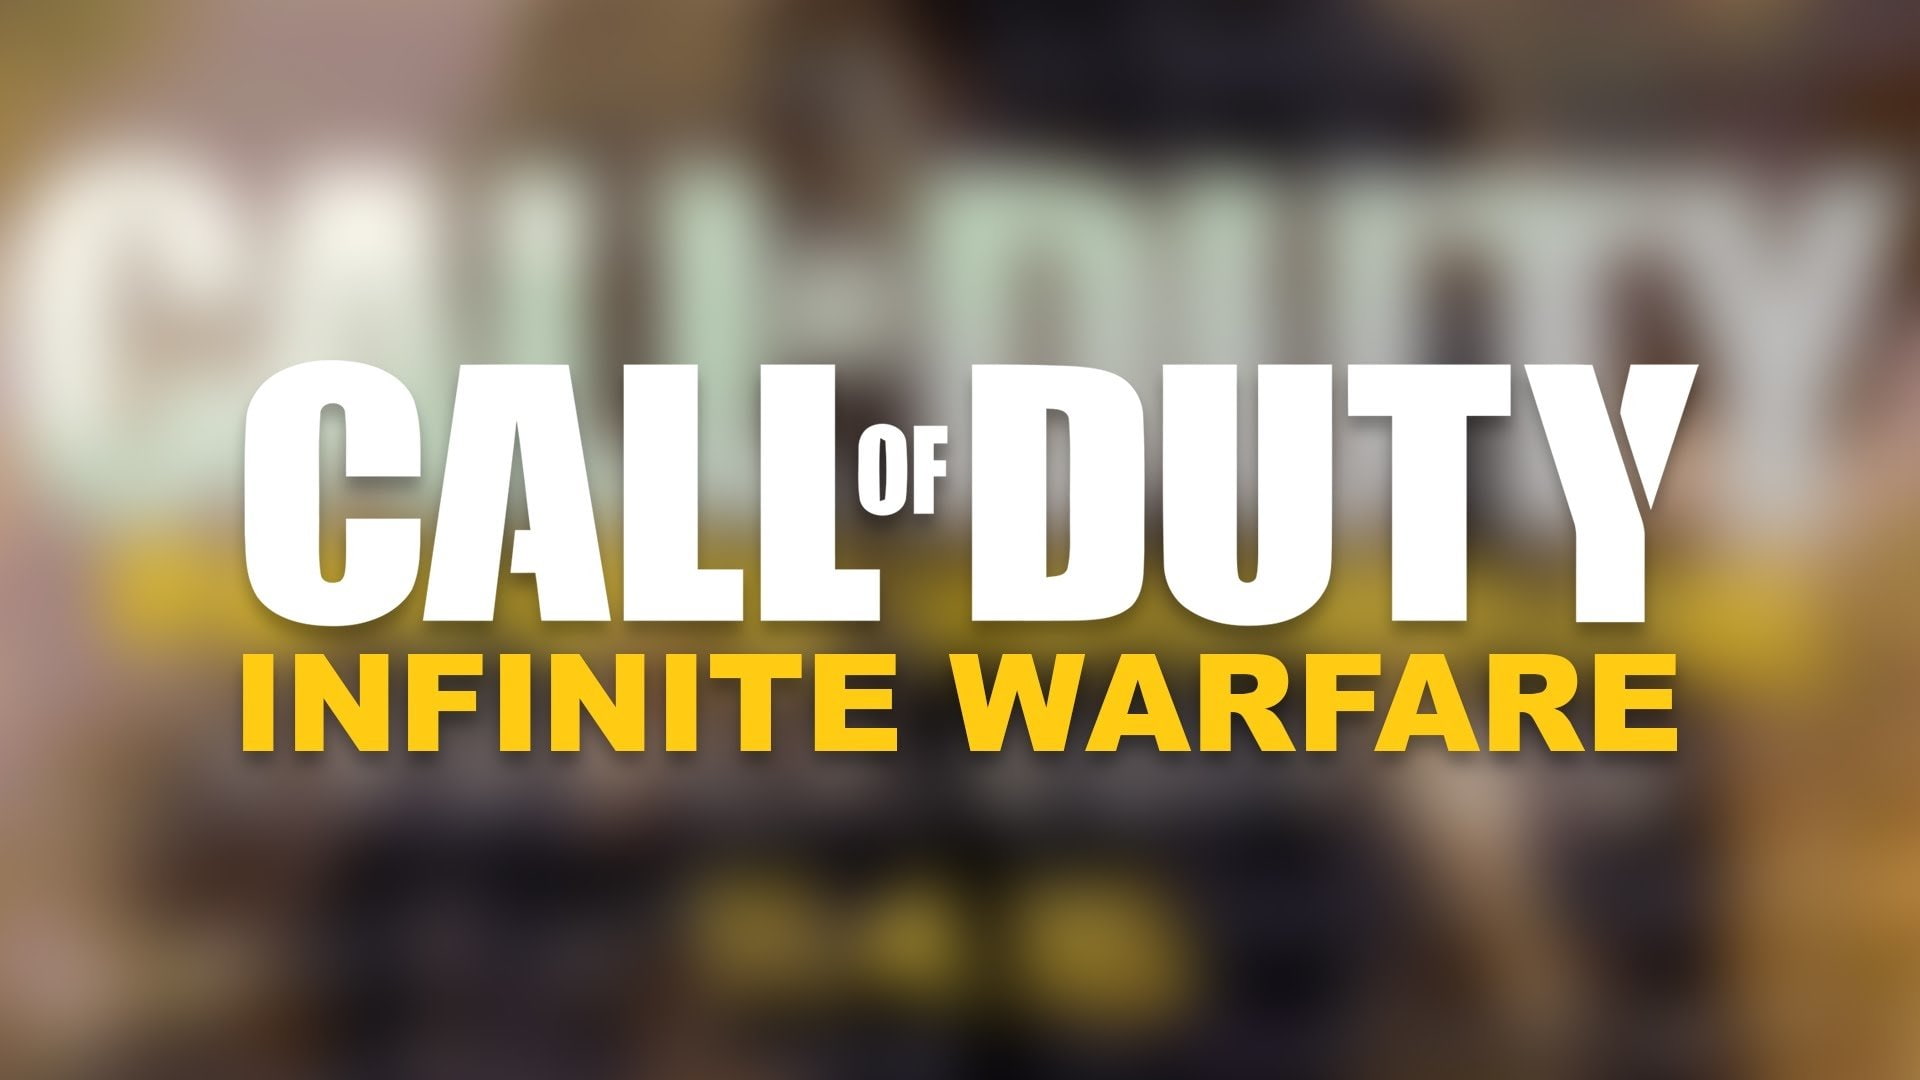 Call of Duty, Call of Duty: Infinite Warfare, Logo, text, communication